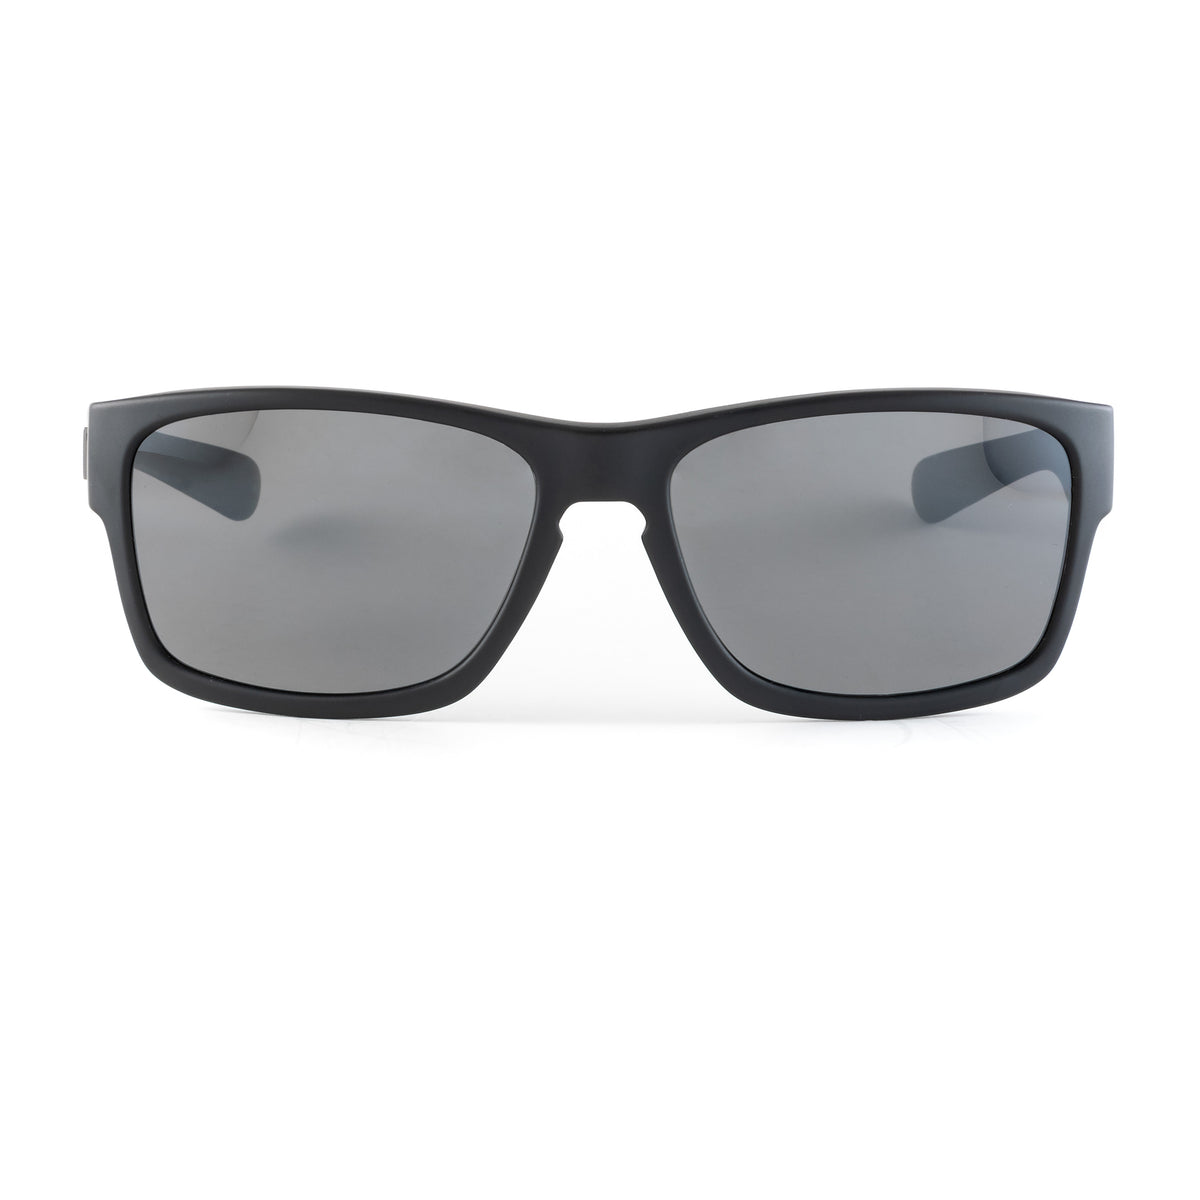 SUNDOG Cookie Polarized Sunglasses - Matte Black/Grey Green